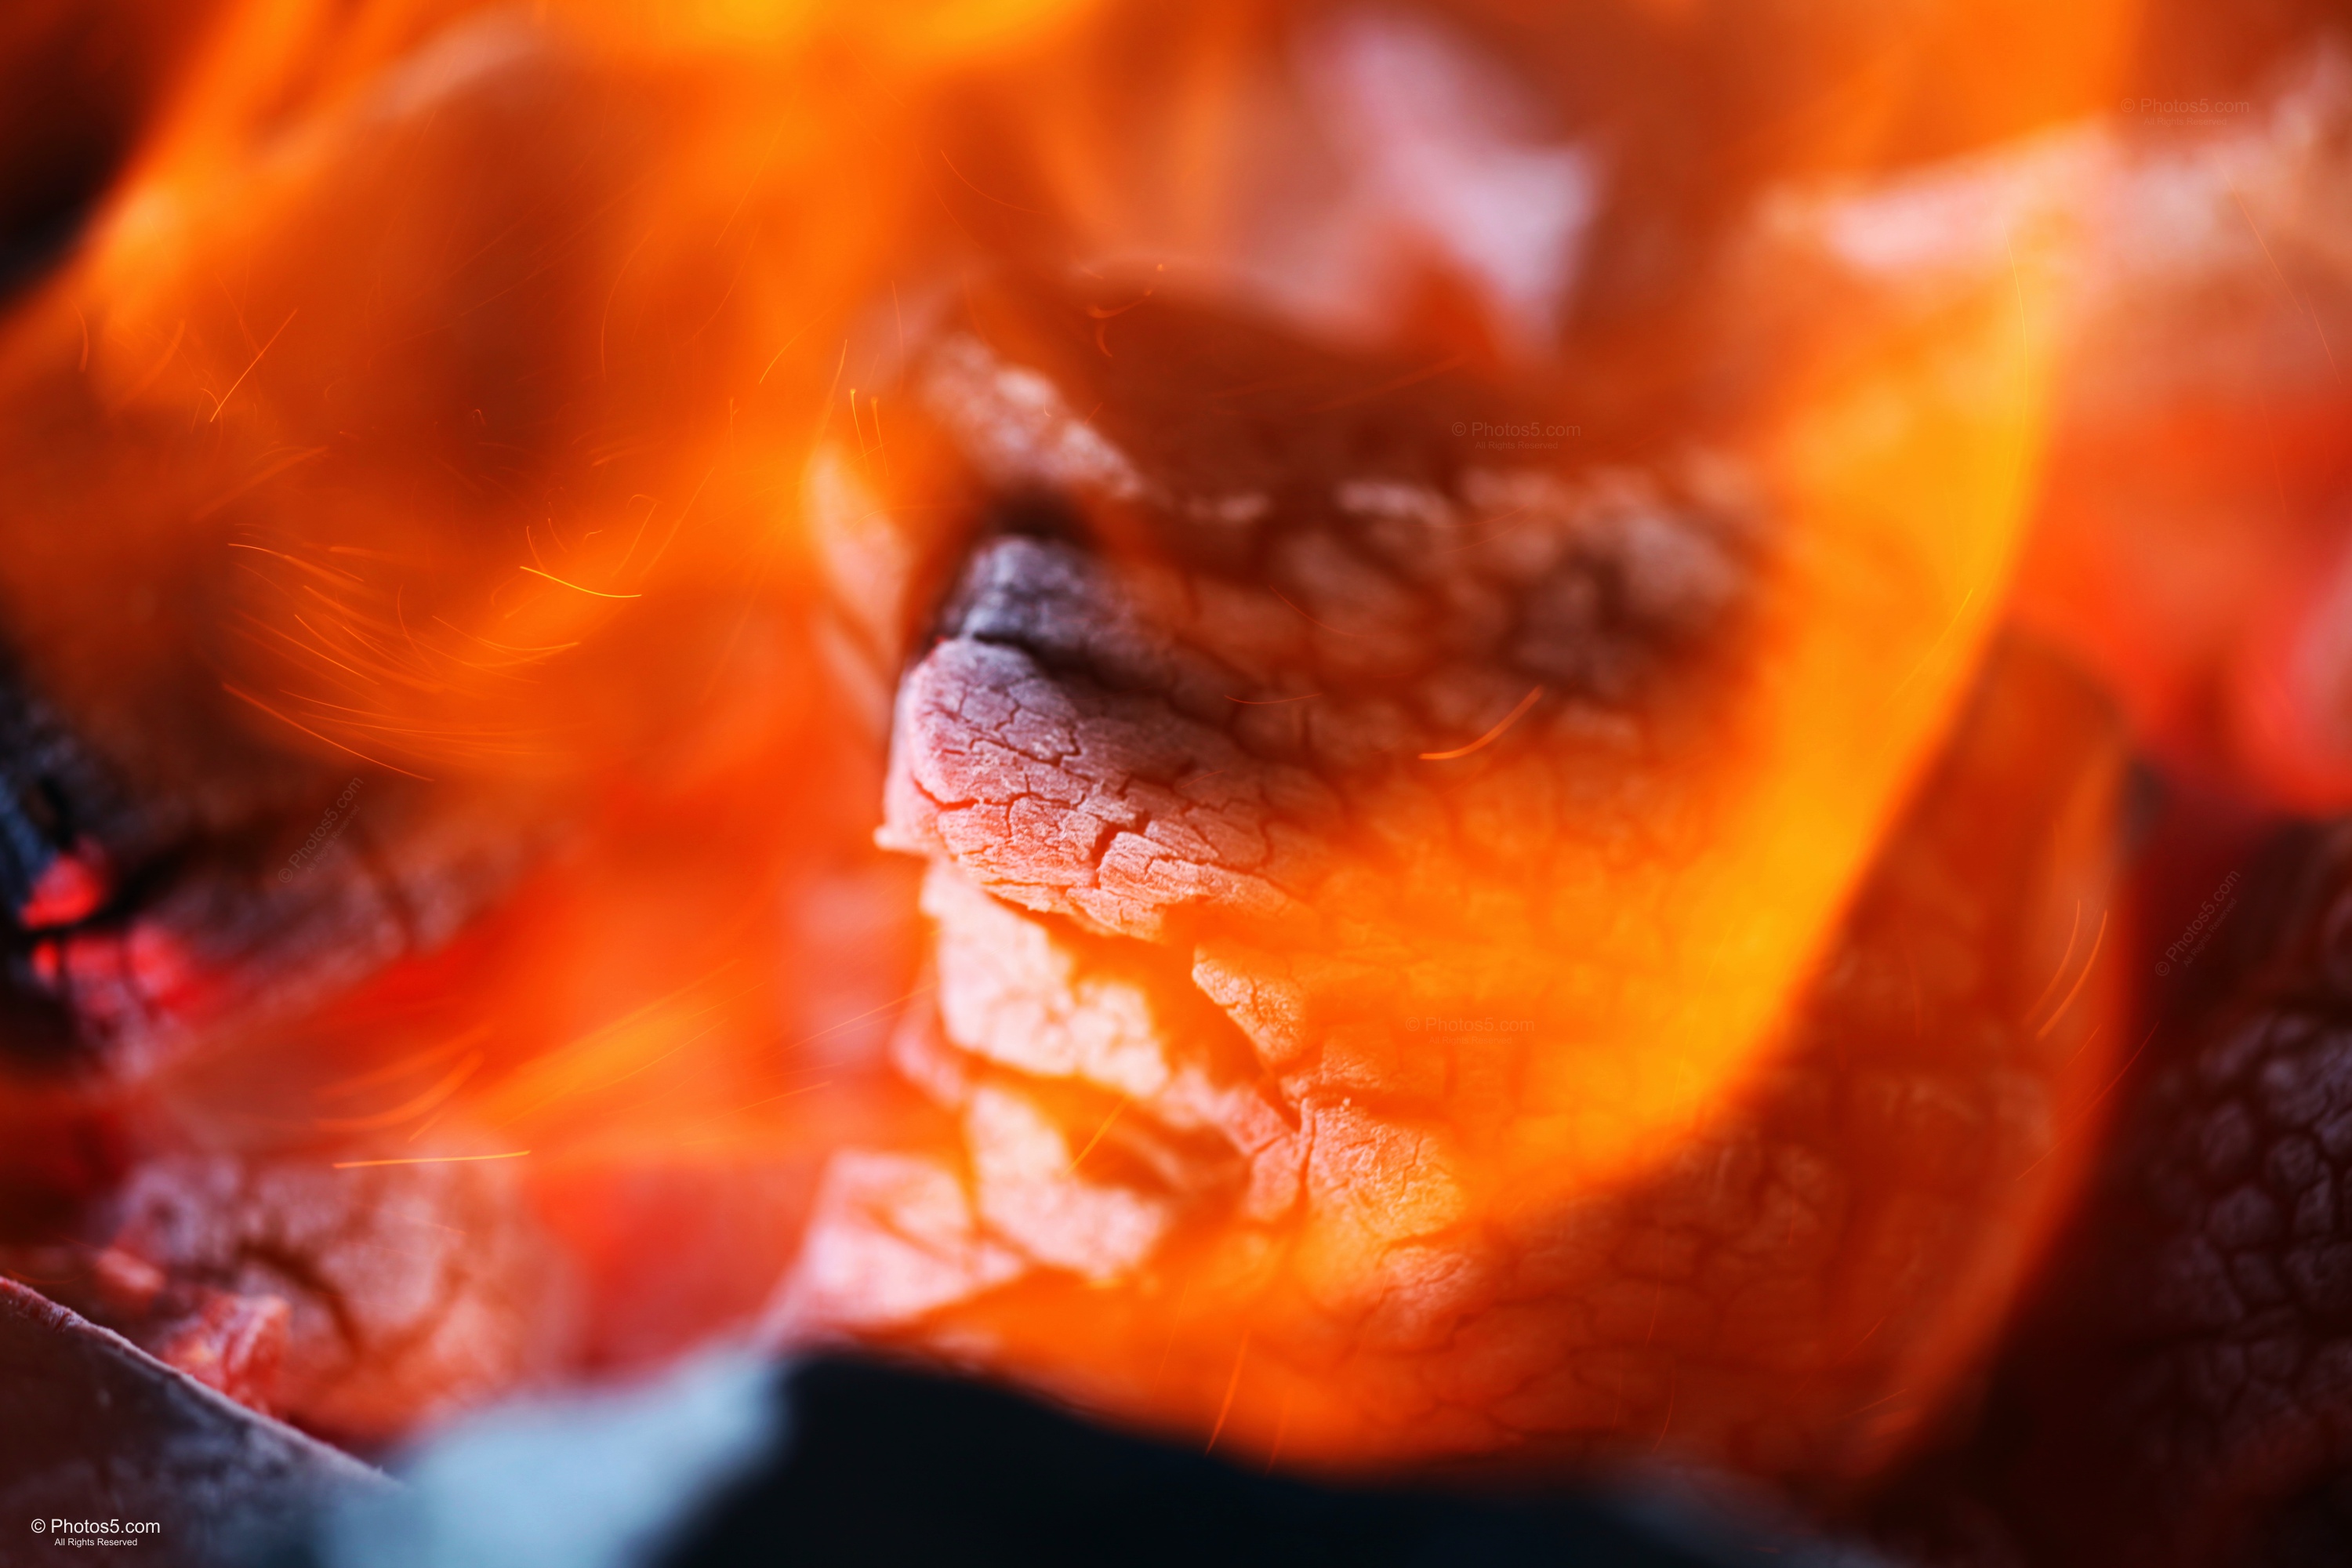 Fire Flames on Burning Coal – Photos5.com